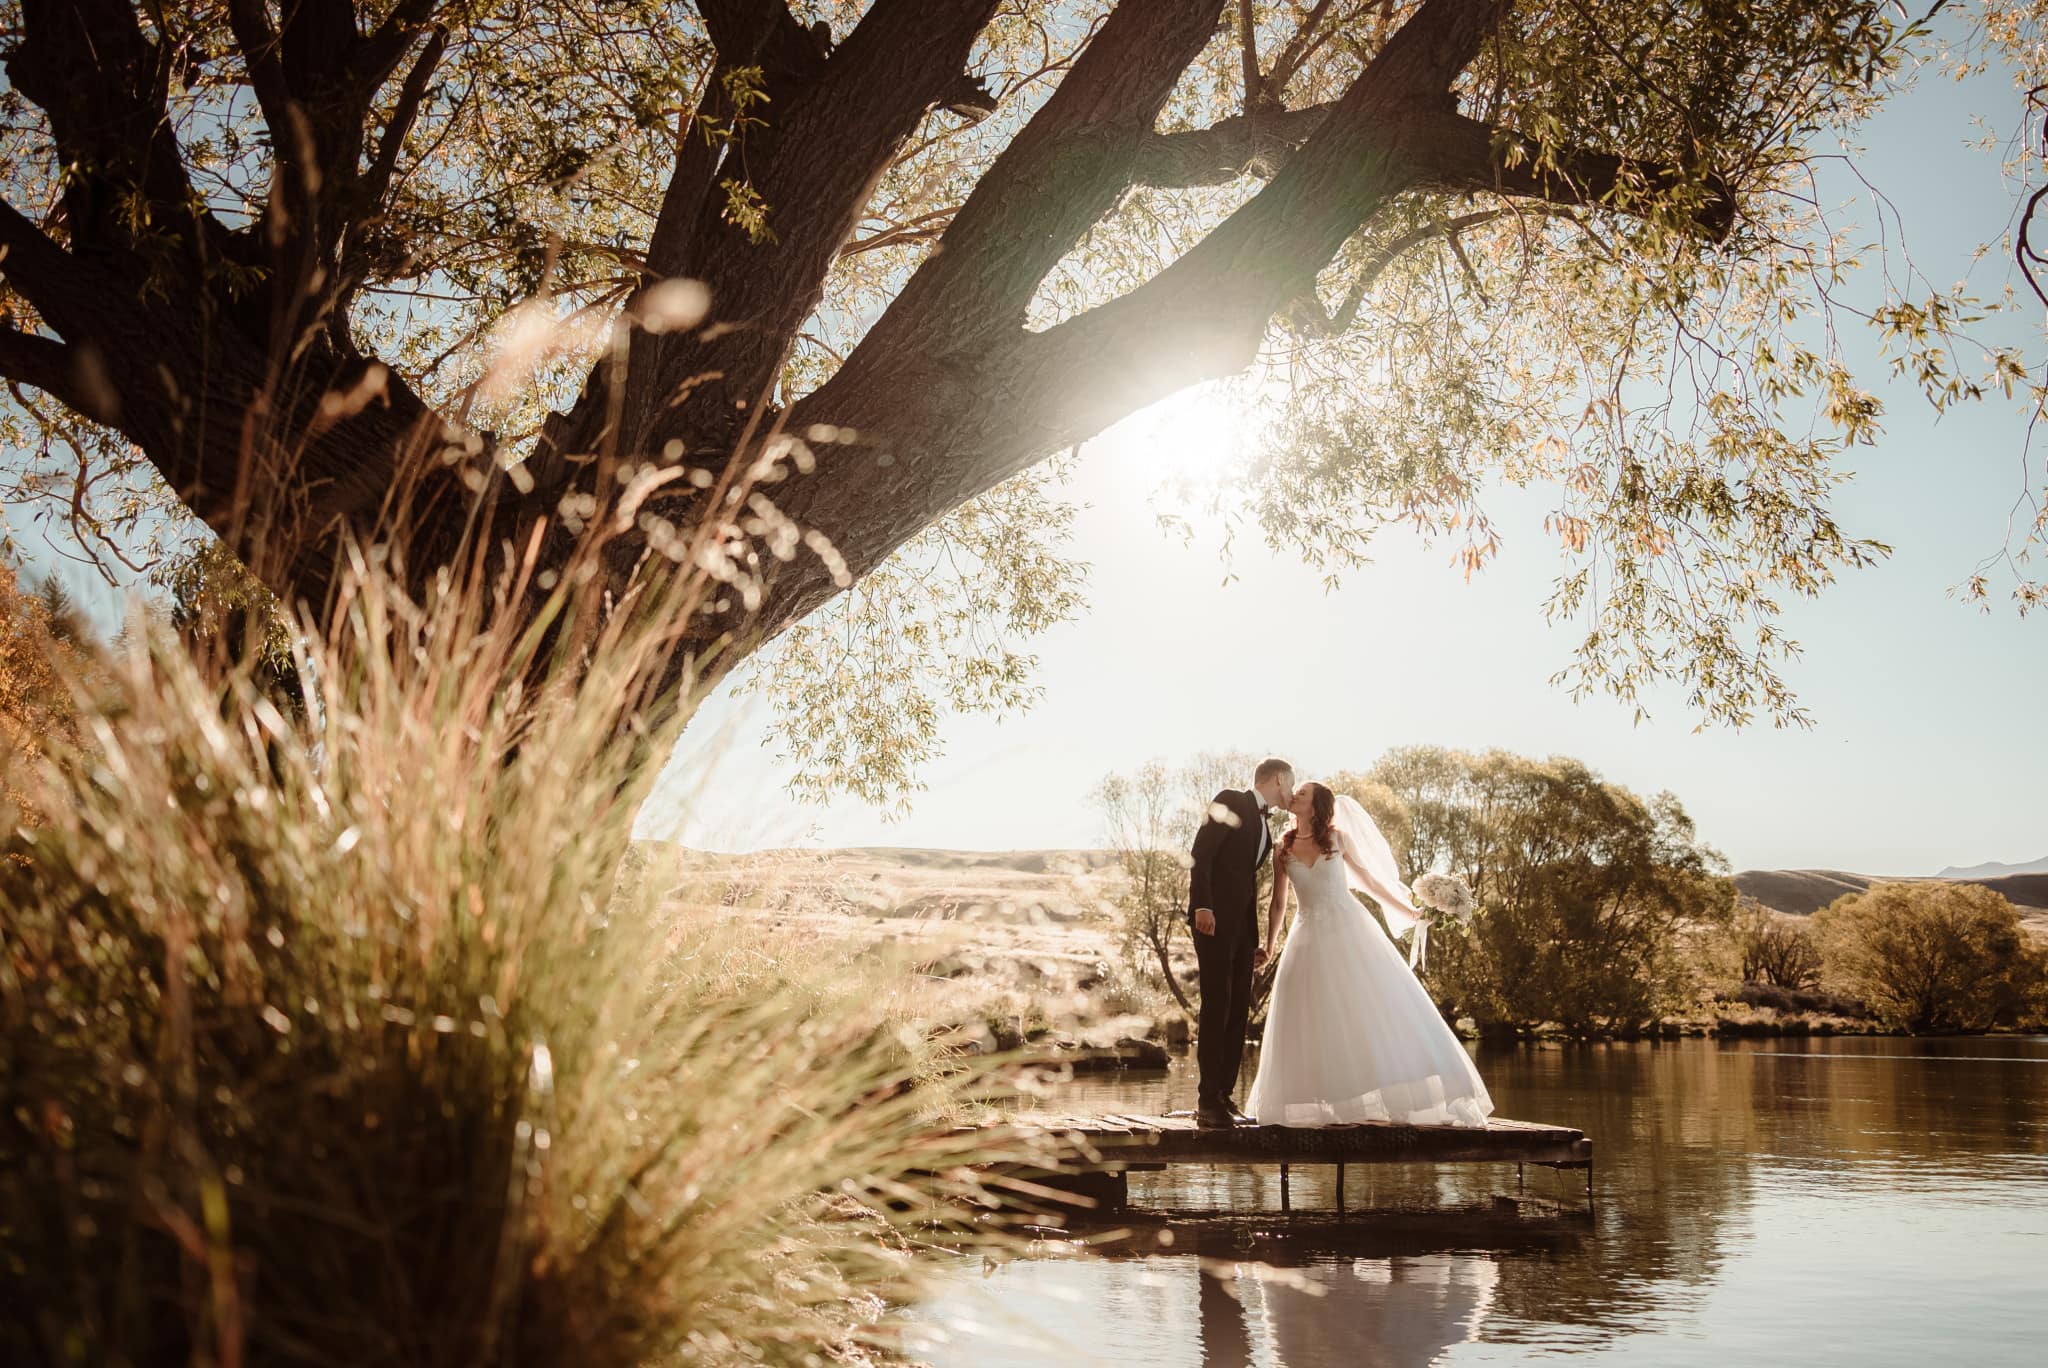 Steliana & Morten's Mt Cook / Tekapo NZ Elopement Wedding - New Zealand Wedding Photographer